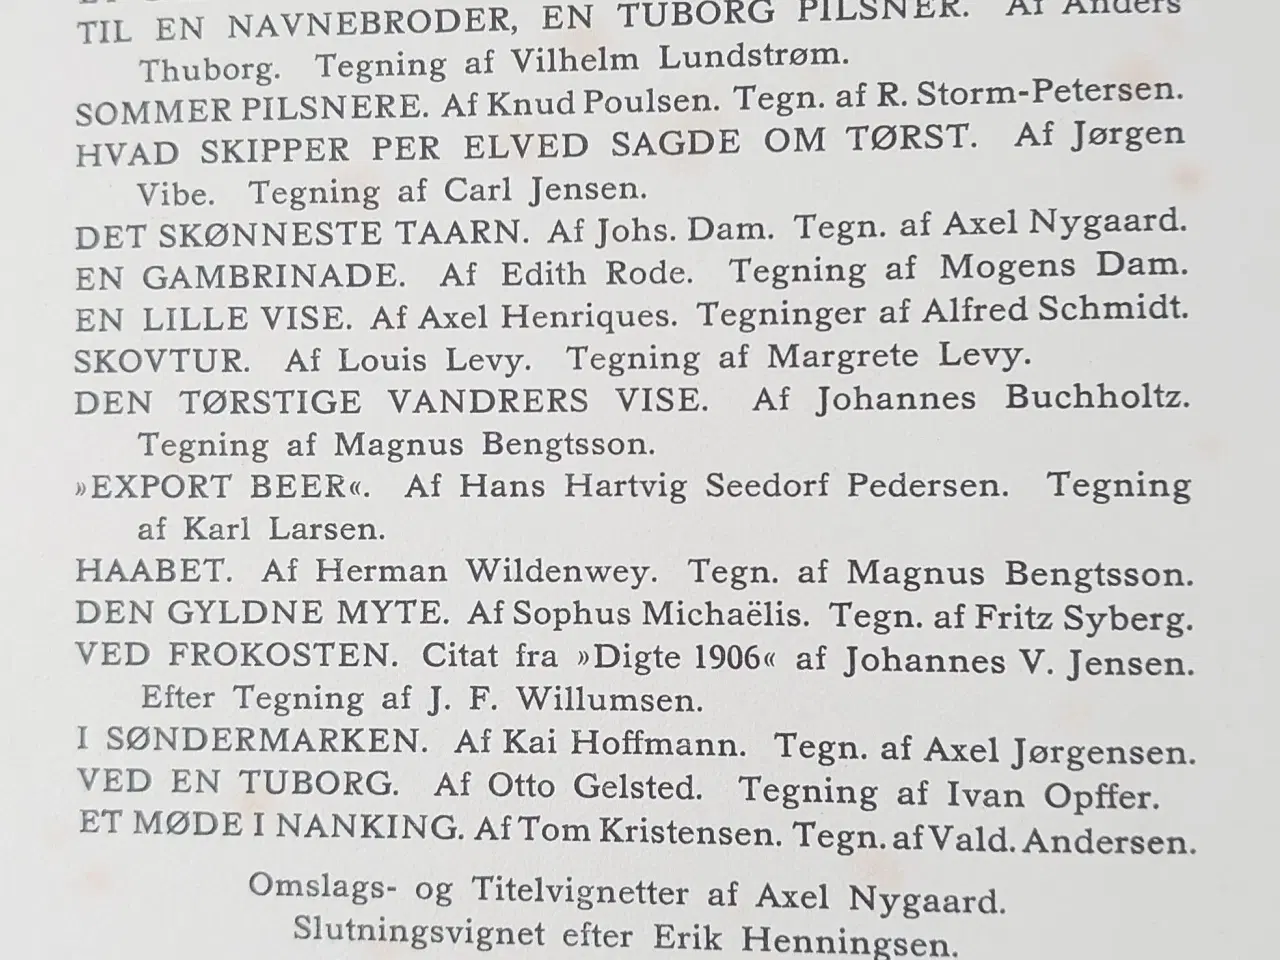 Billede 3 - J. Larsen og M. Bengtsson (red.): Jubelbryg 1923.